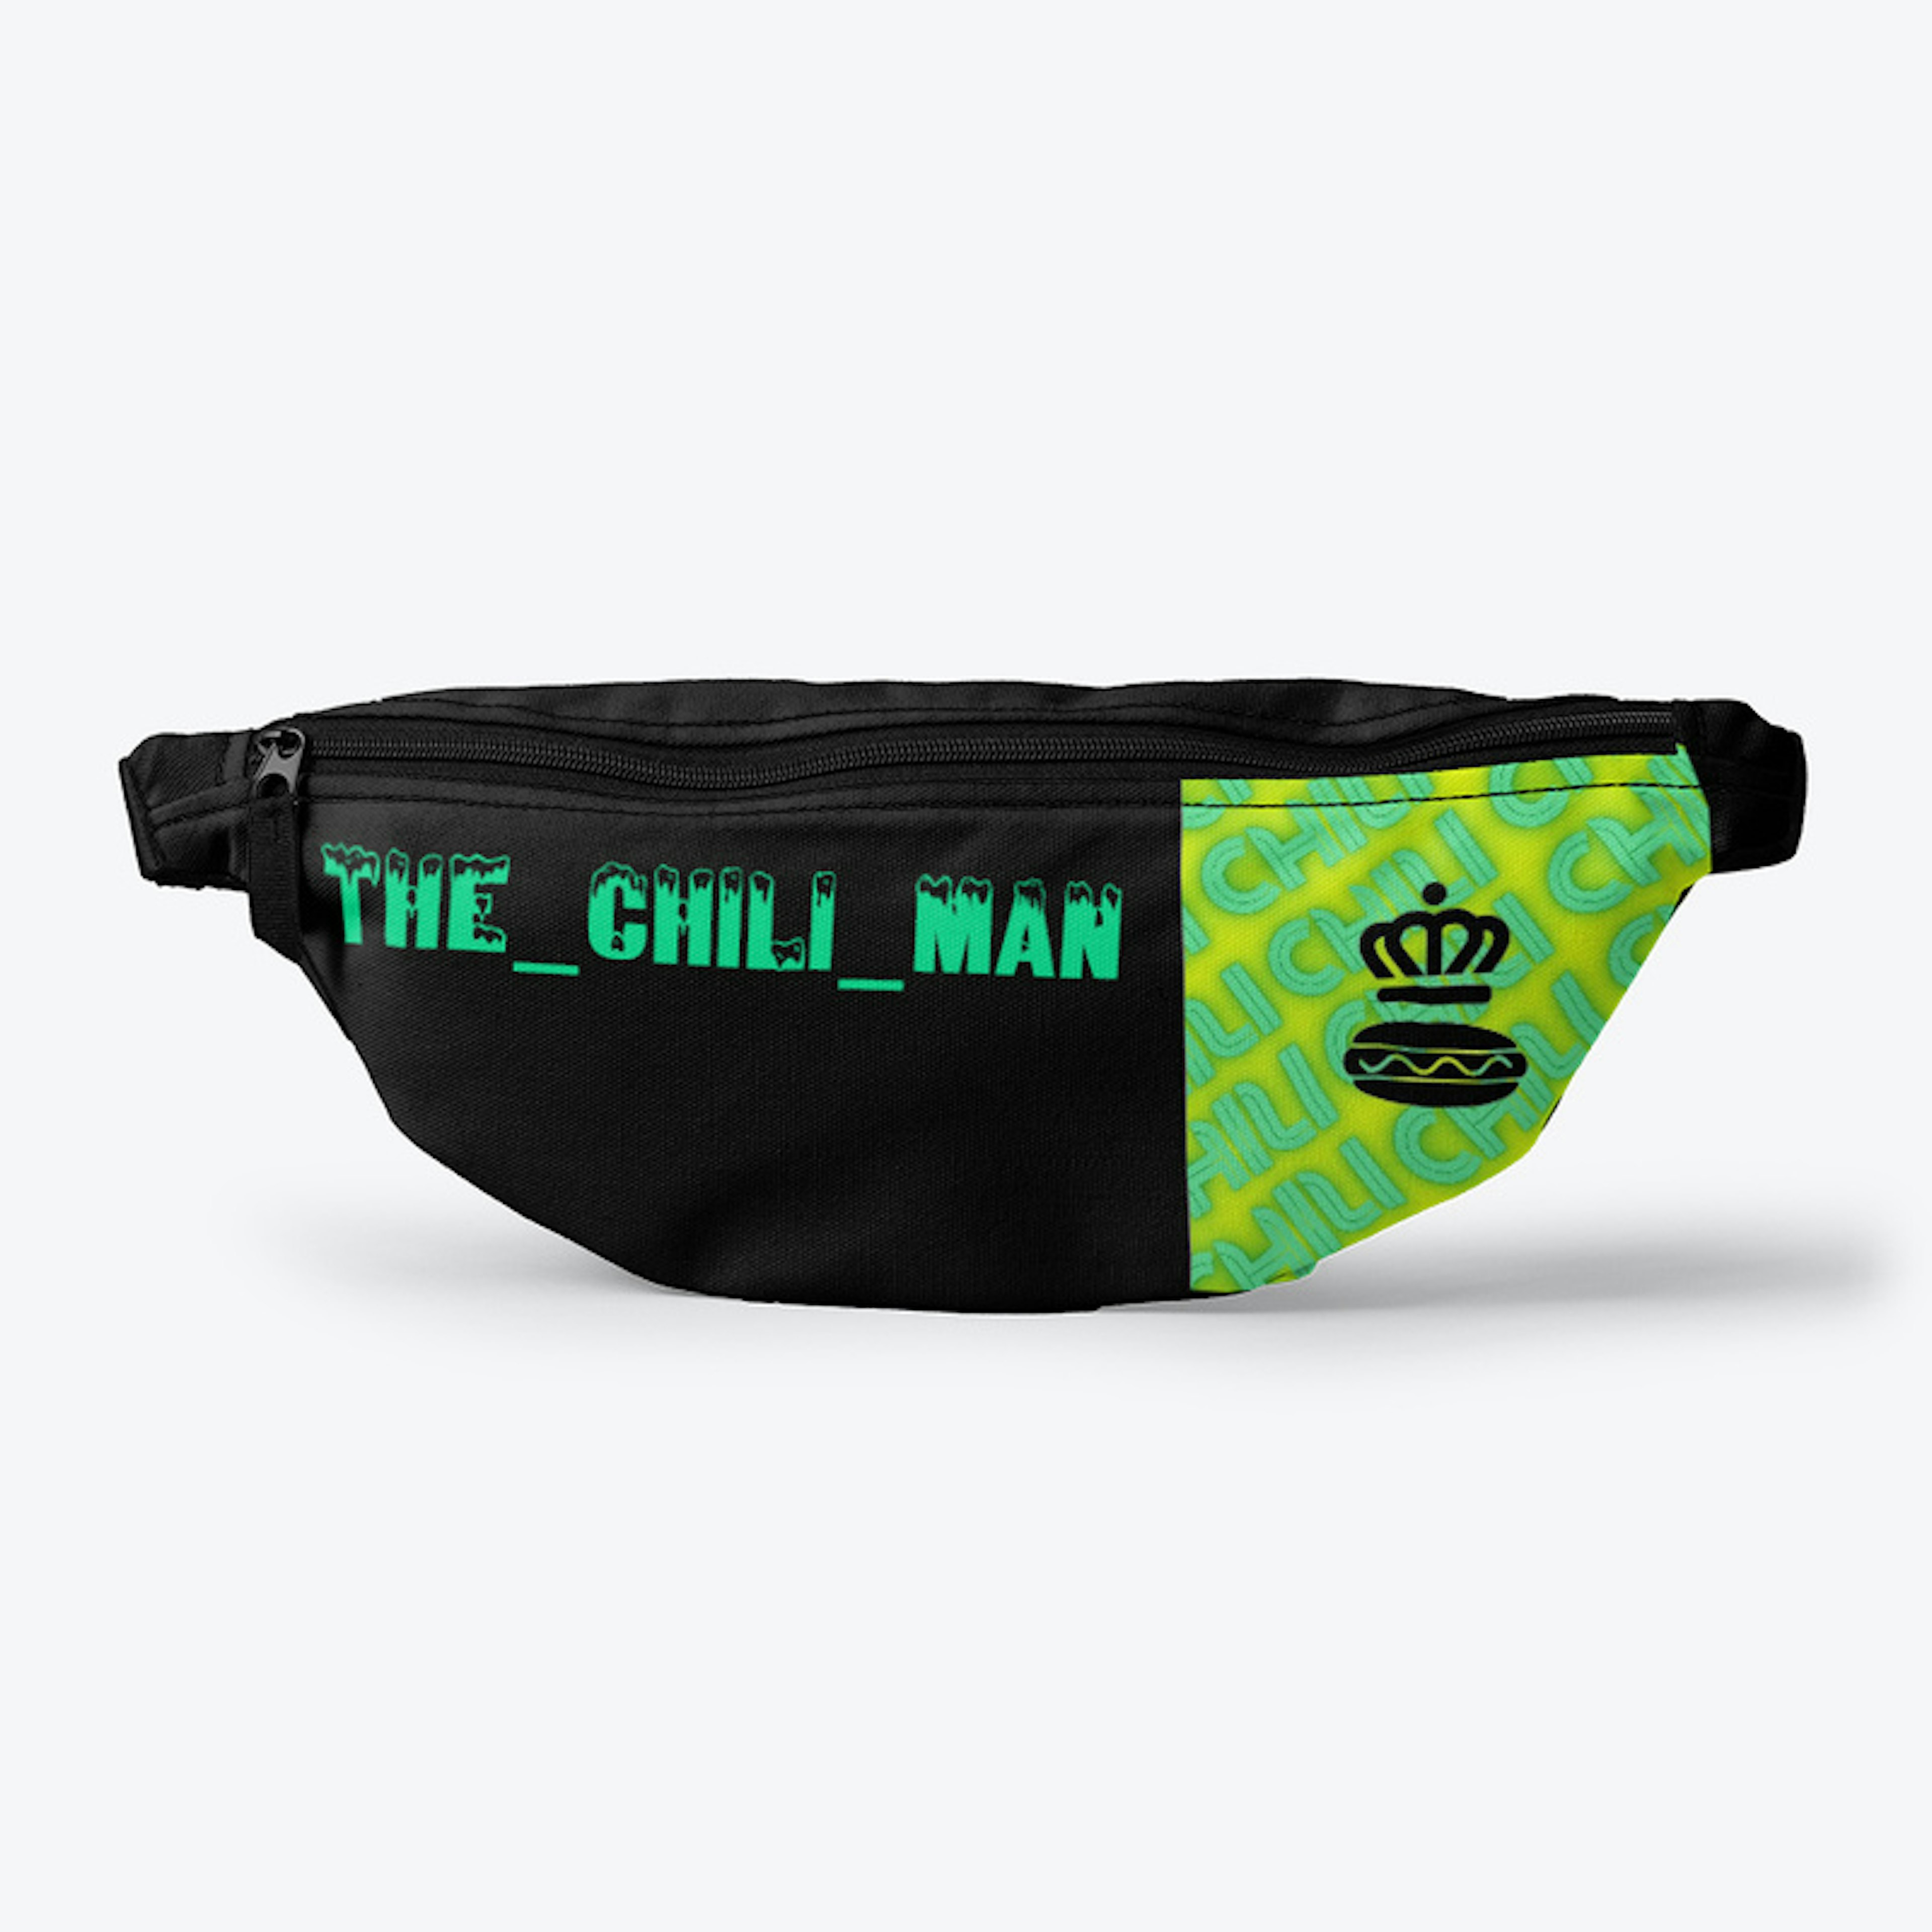 The_chili_man2.0